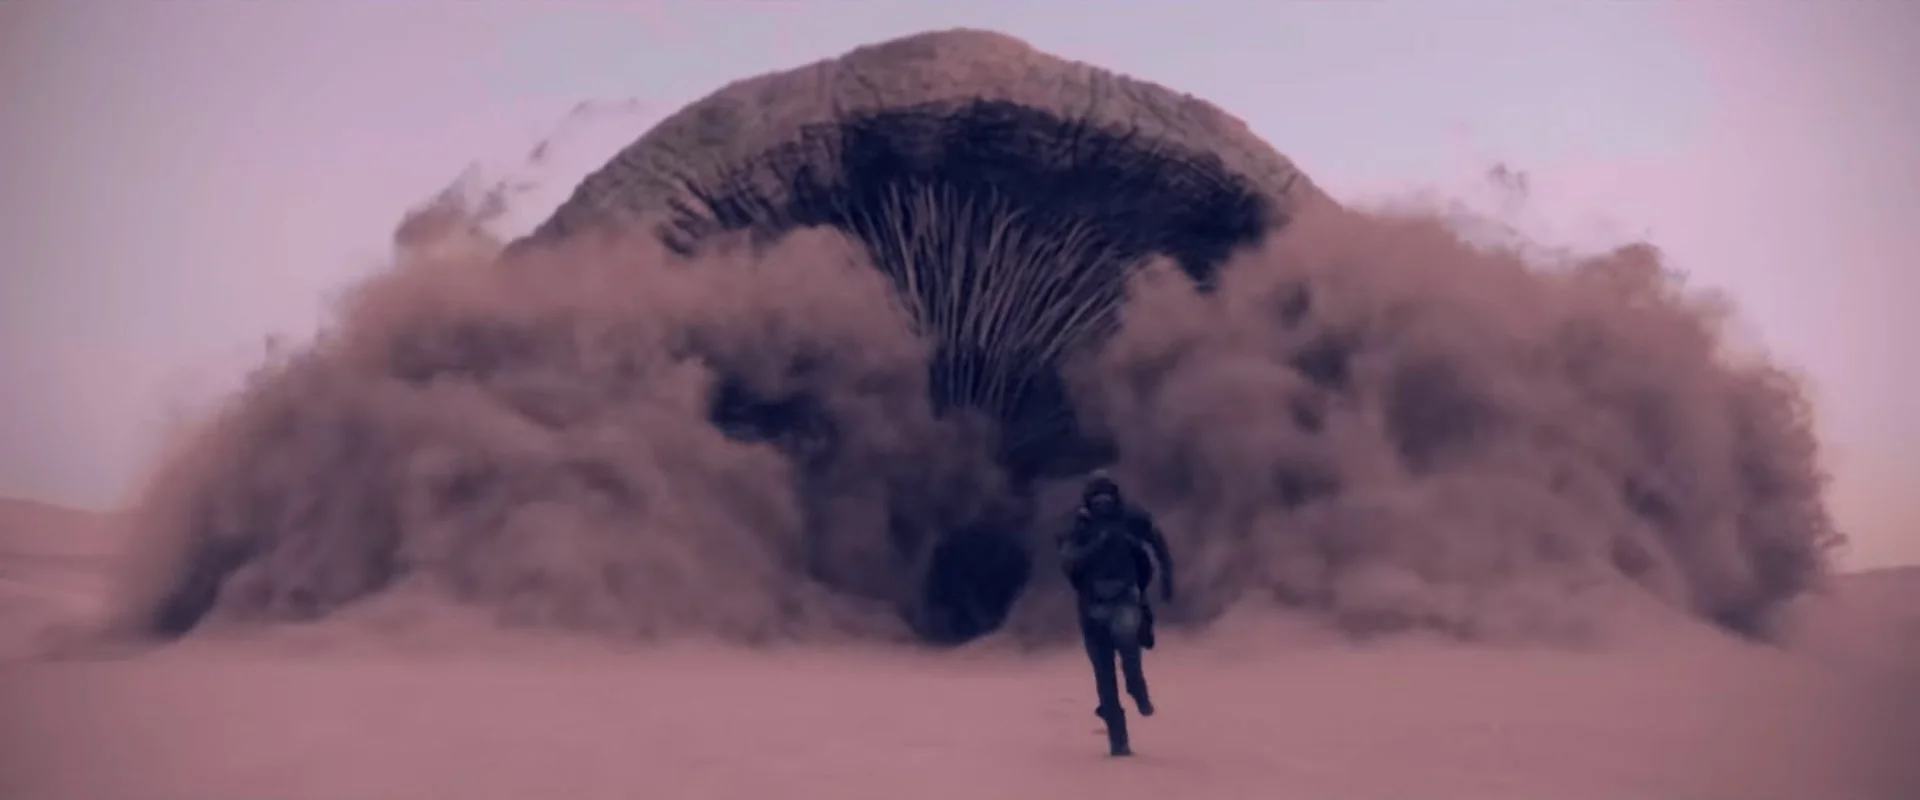 Paul Atreides runs from a gigantic sandworm in the Dune: Part One (2021) movie.